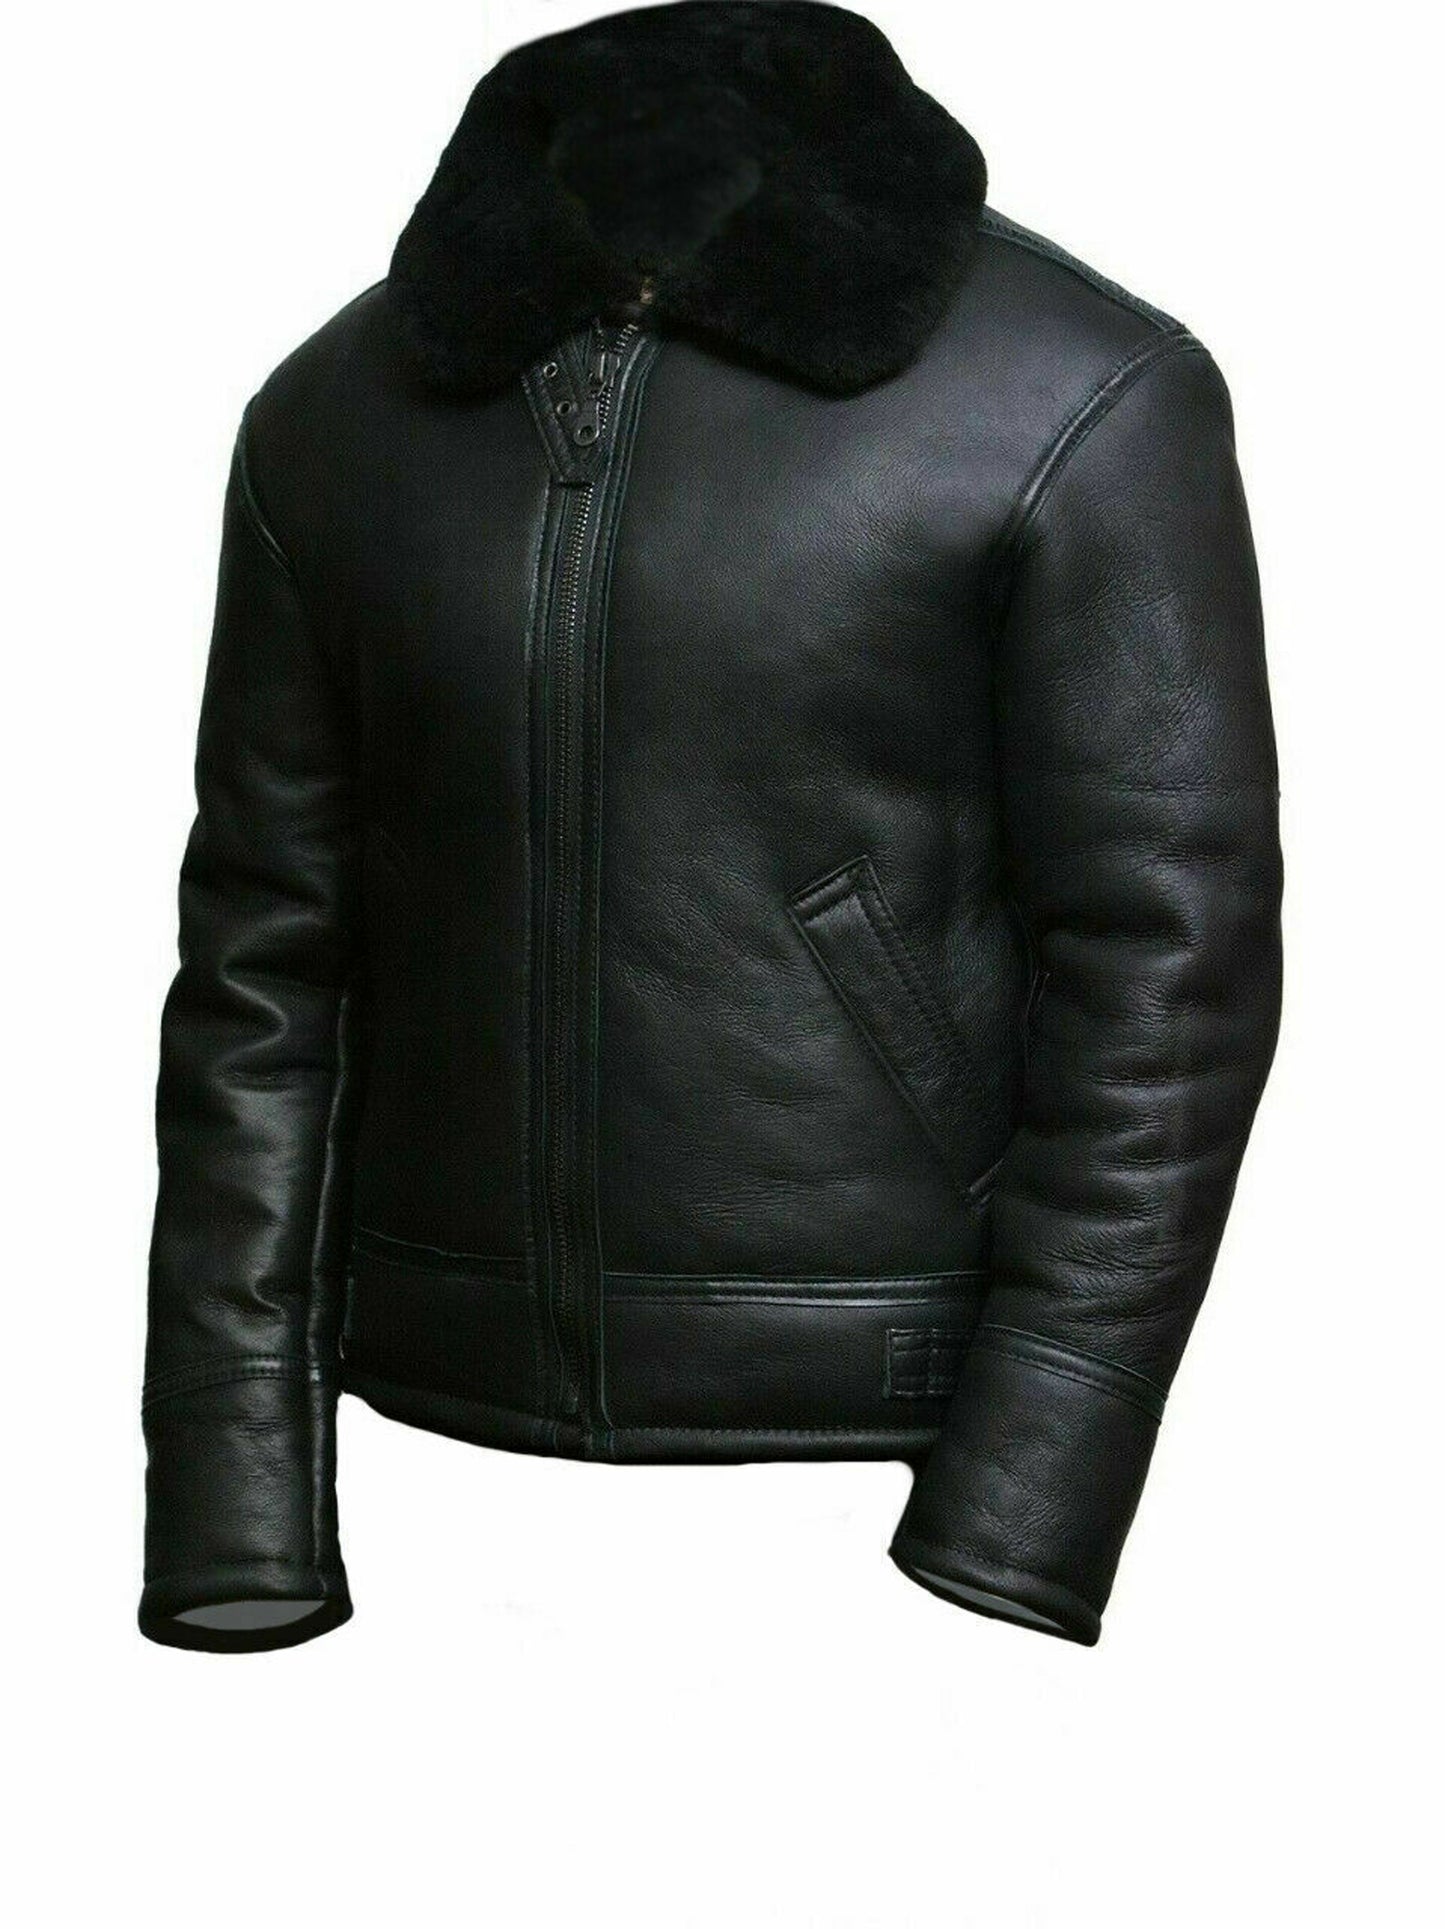 Black Shearling Aviator Leather Jacket, Men's winter shearling coat